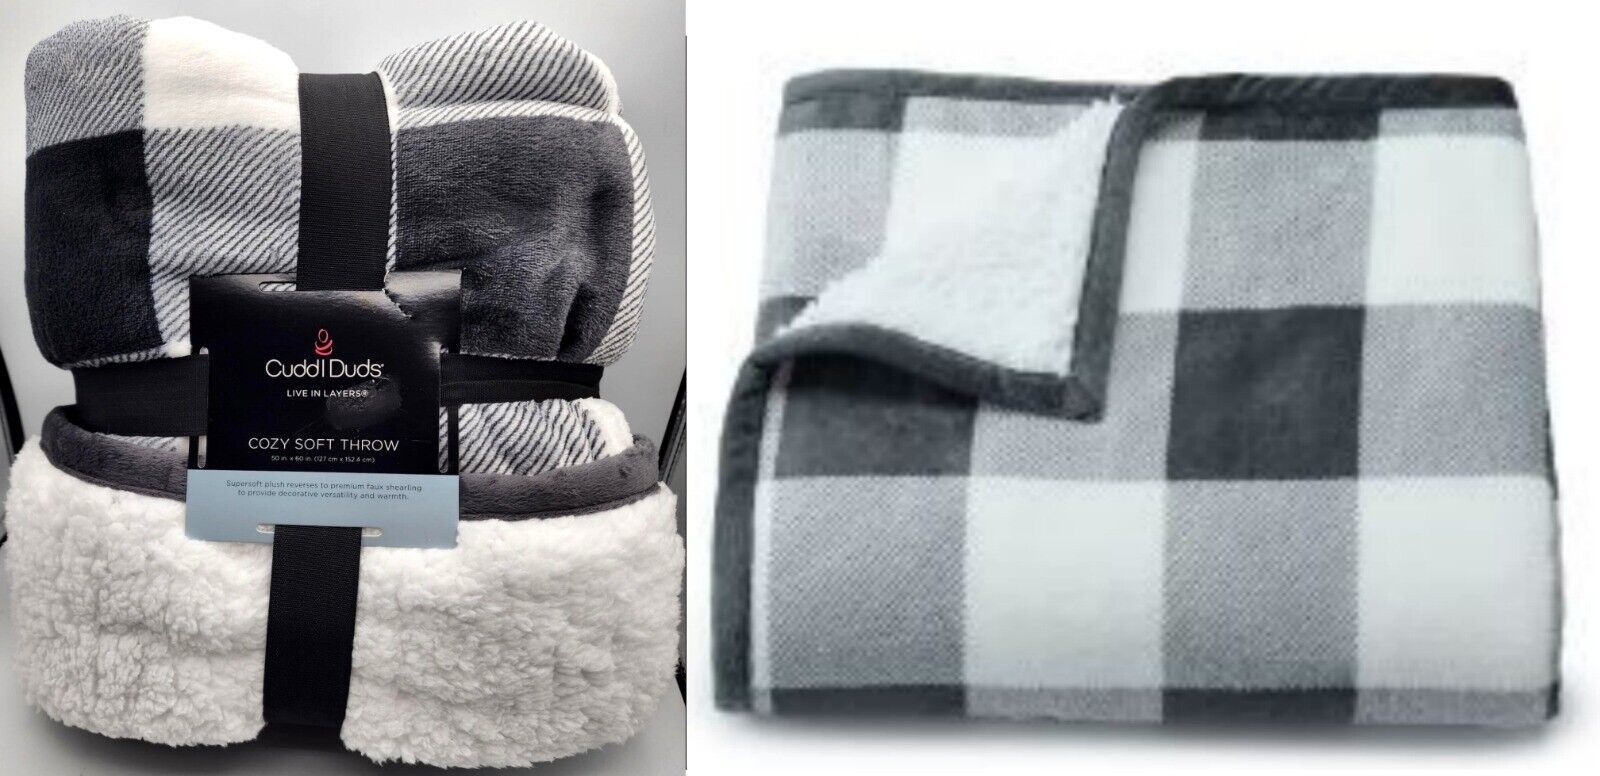 $50 Cuddl Duds Cozy Fleece Sherpa Throw Blanket-Black White Gray Buffalo Check - $34.97